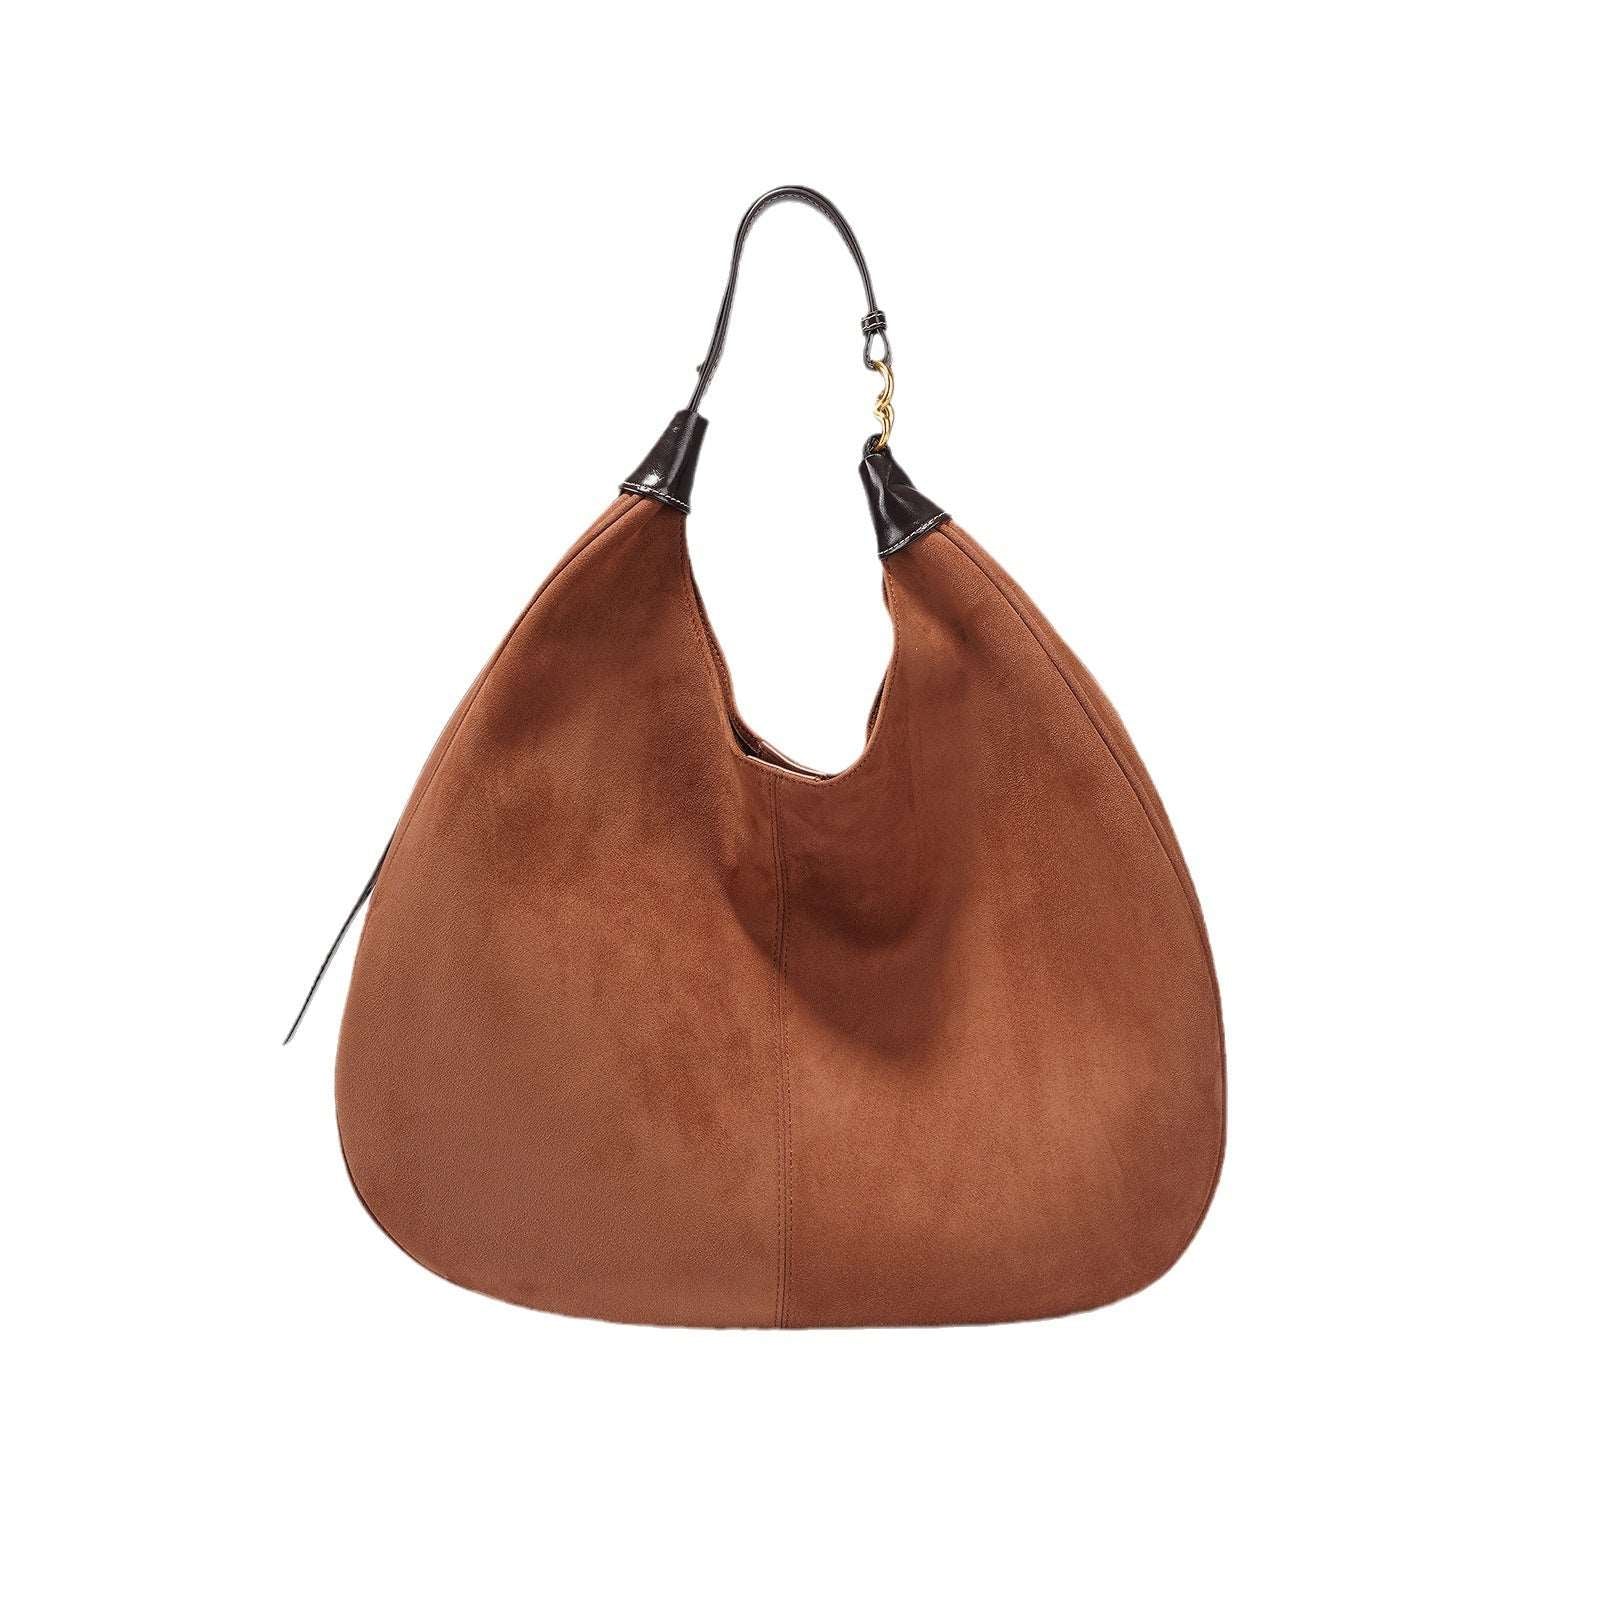 Sophisticated Women's Large Tote Handbag